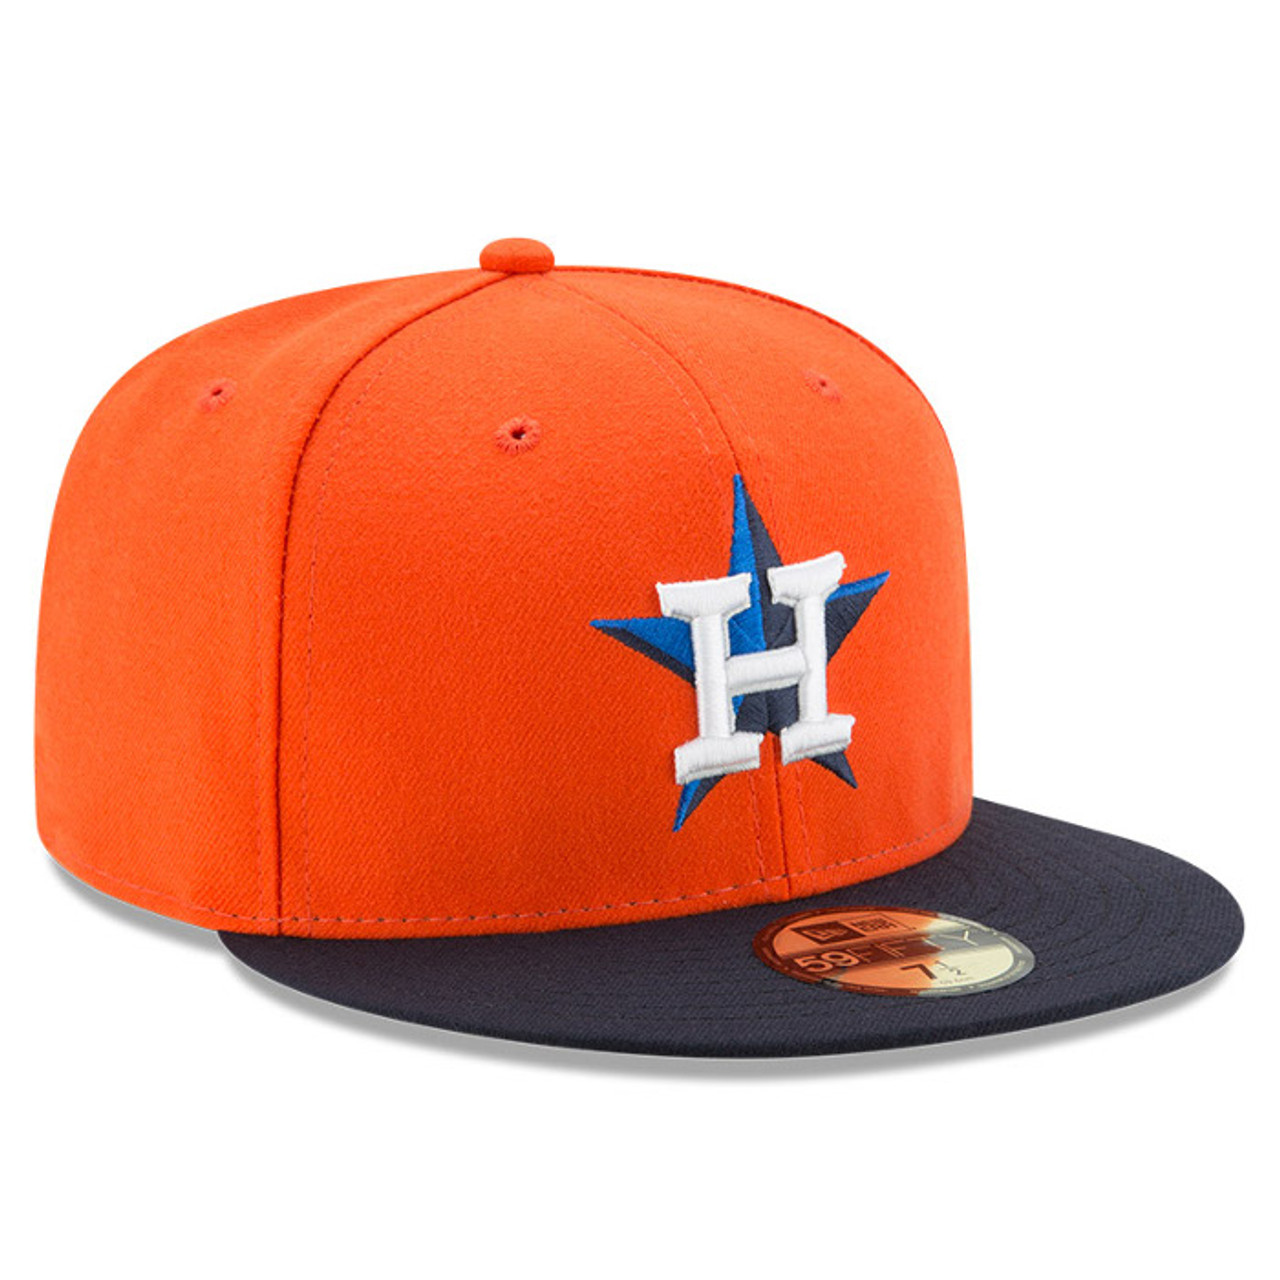  New Era Houston Astros Youth League 940 Navy Adjustable Cap :  Sports Fan Baseball Caps : Sports & Outdoors